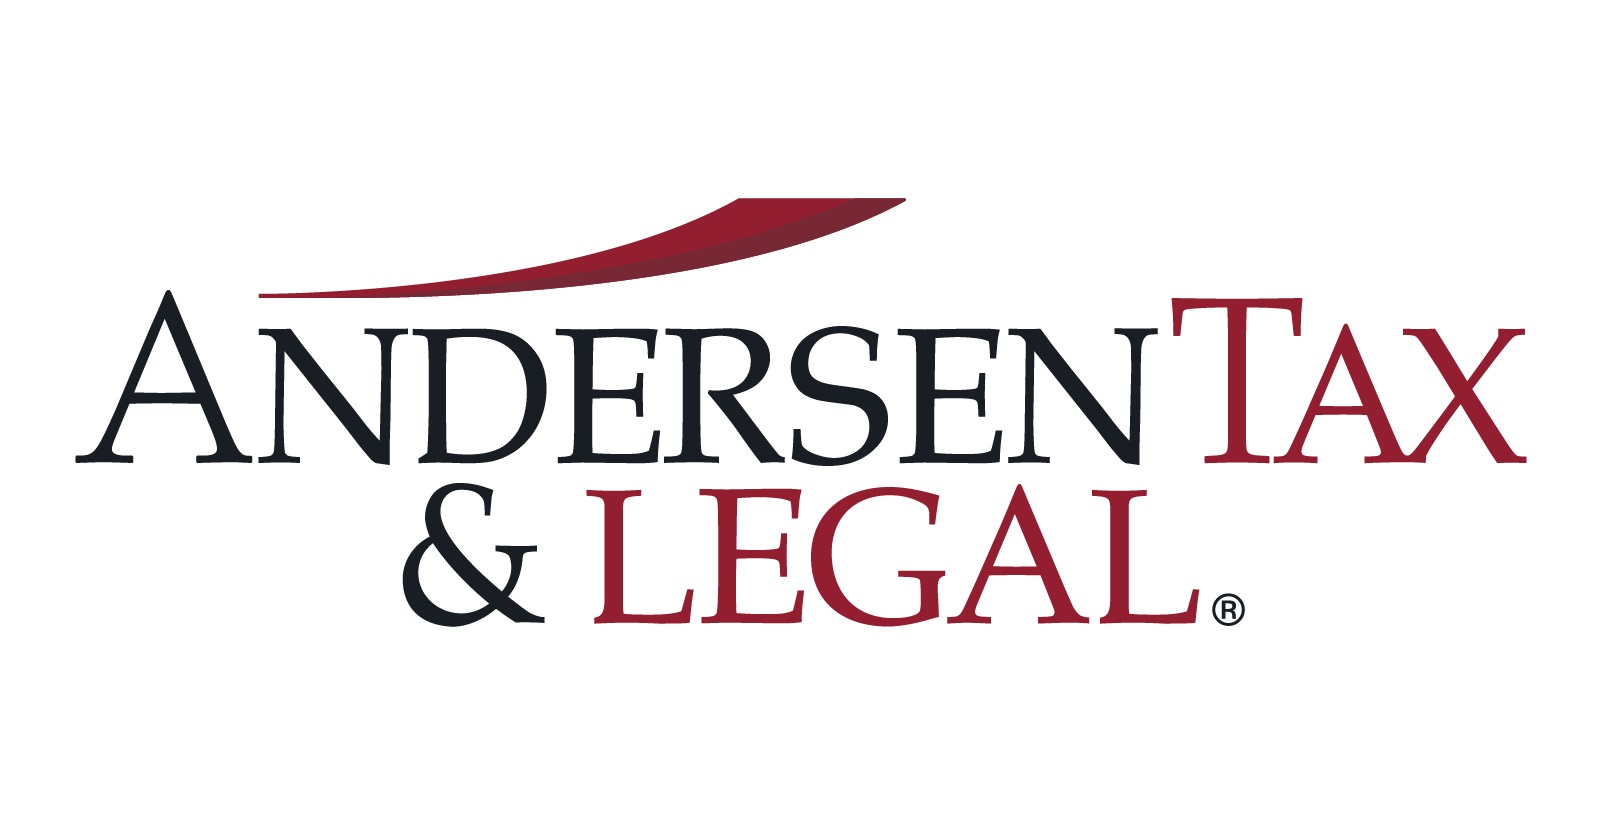 Andersen Tax legal